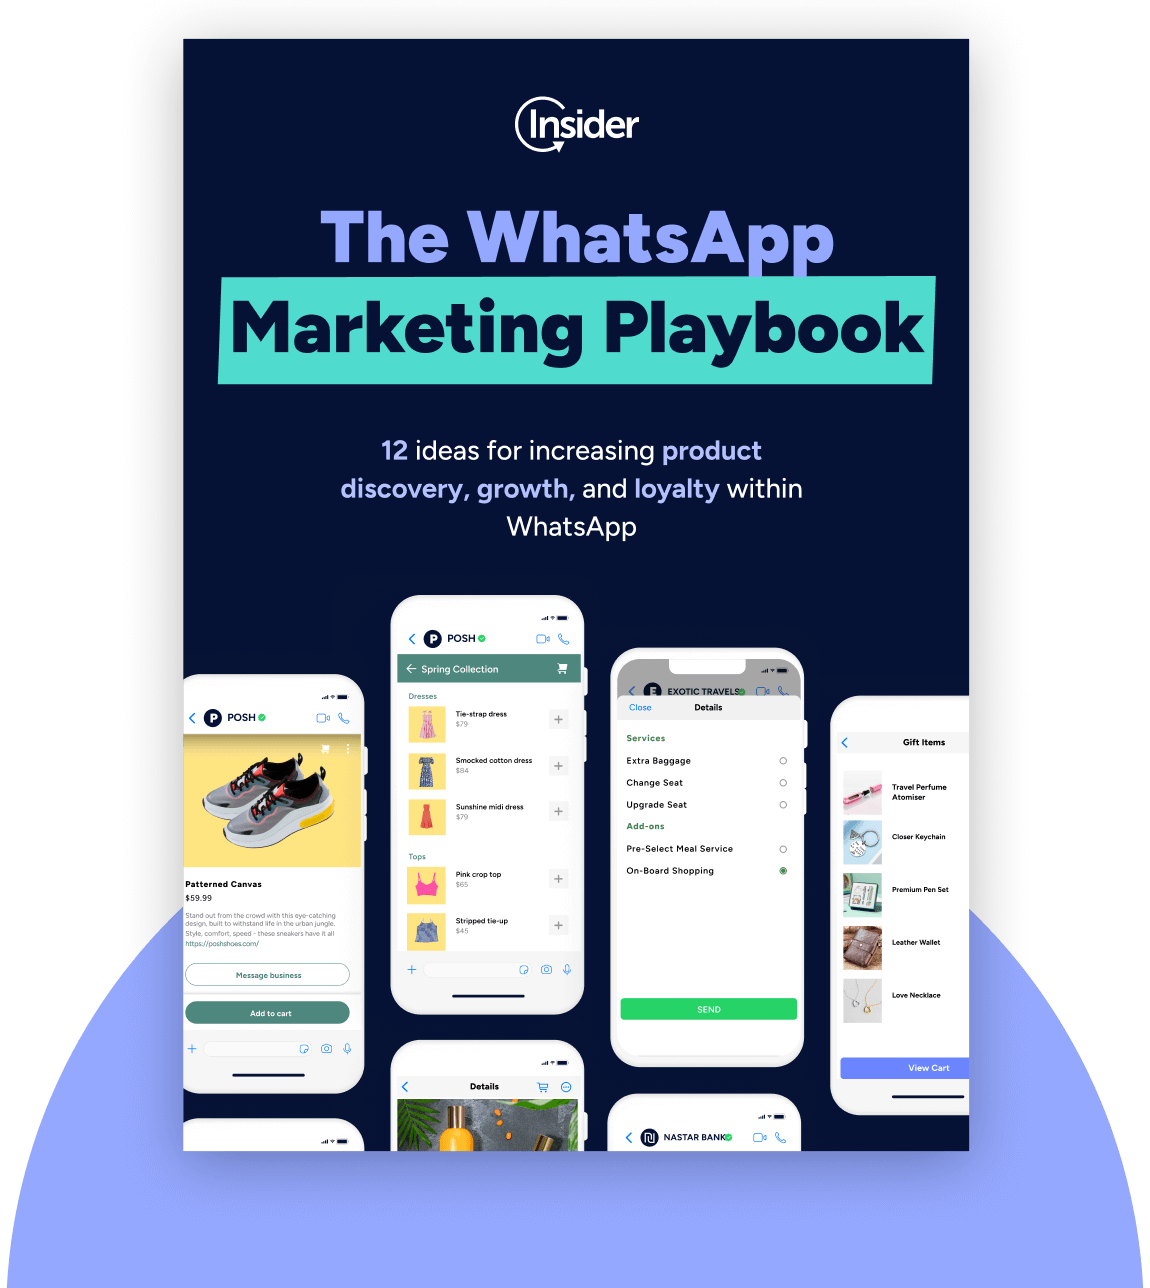 The WhatsApp Marketing Playbook